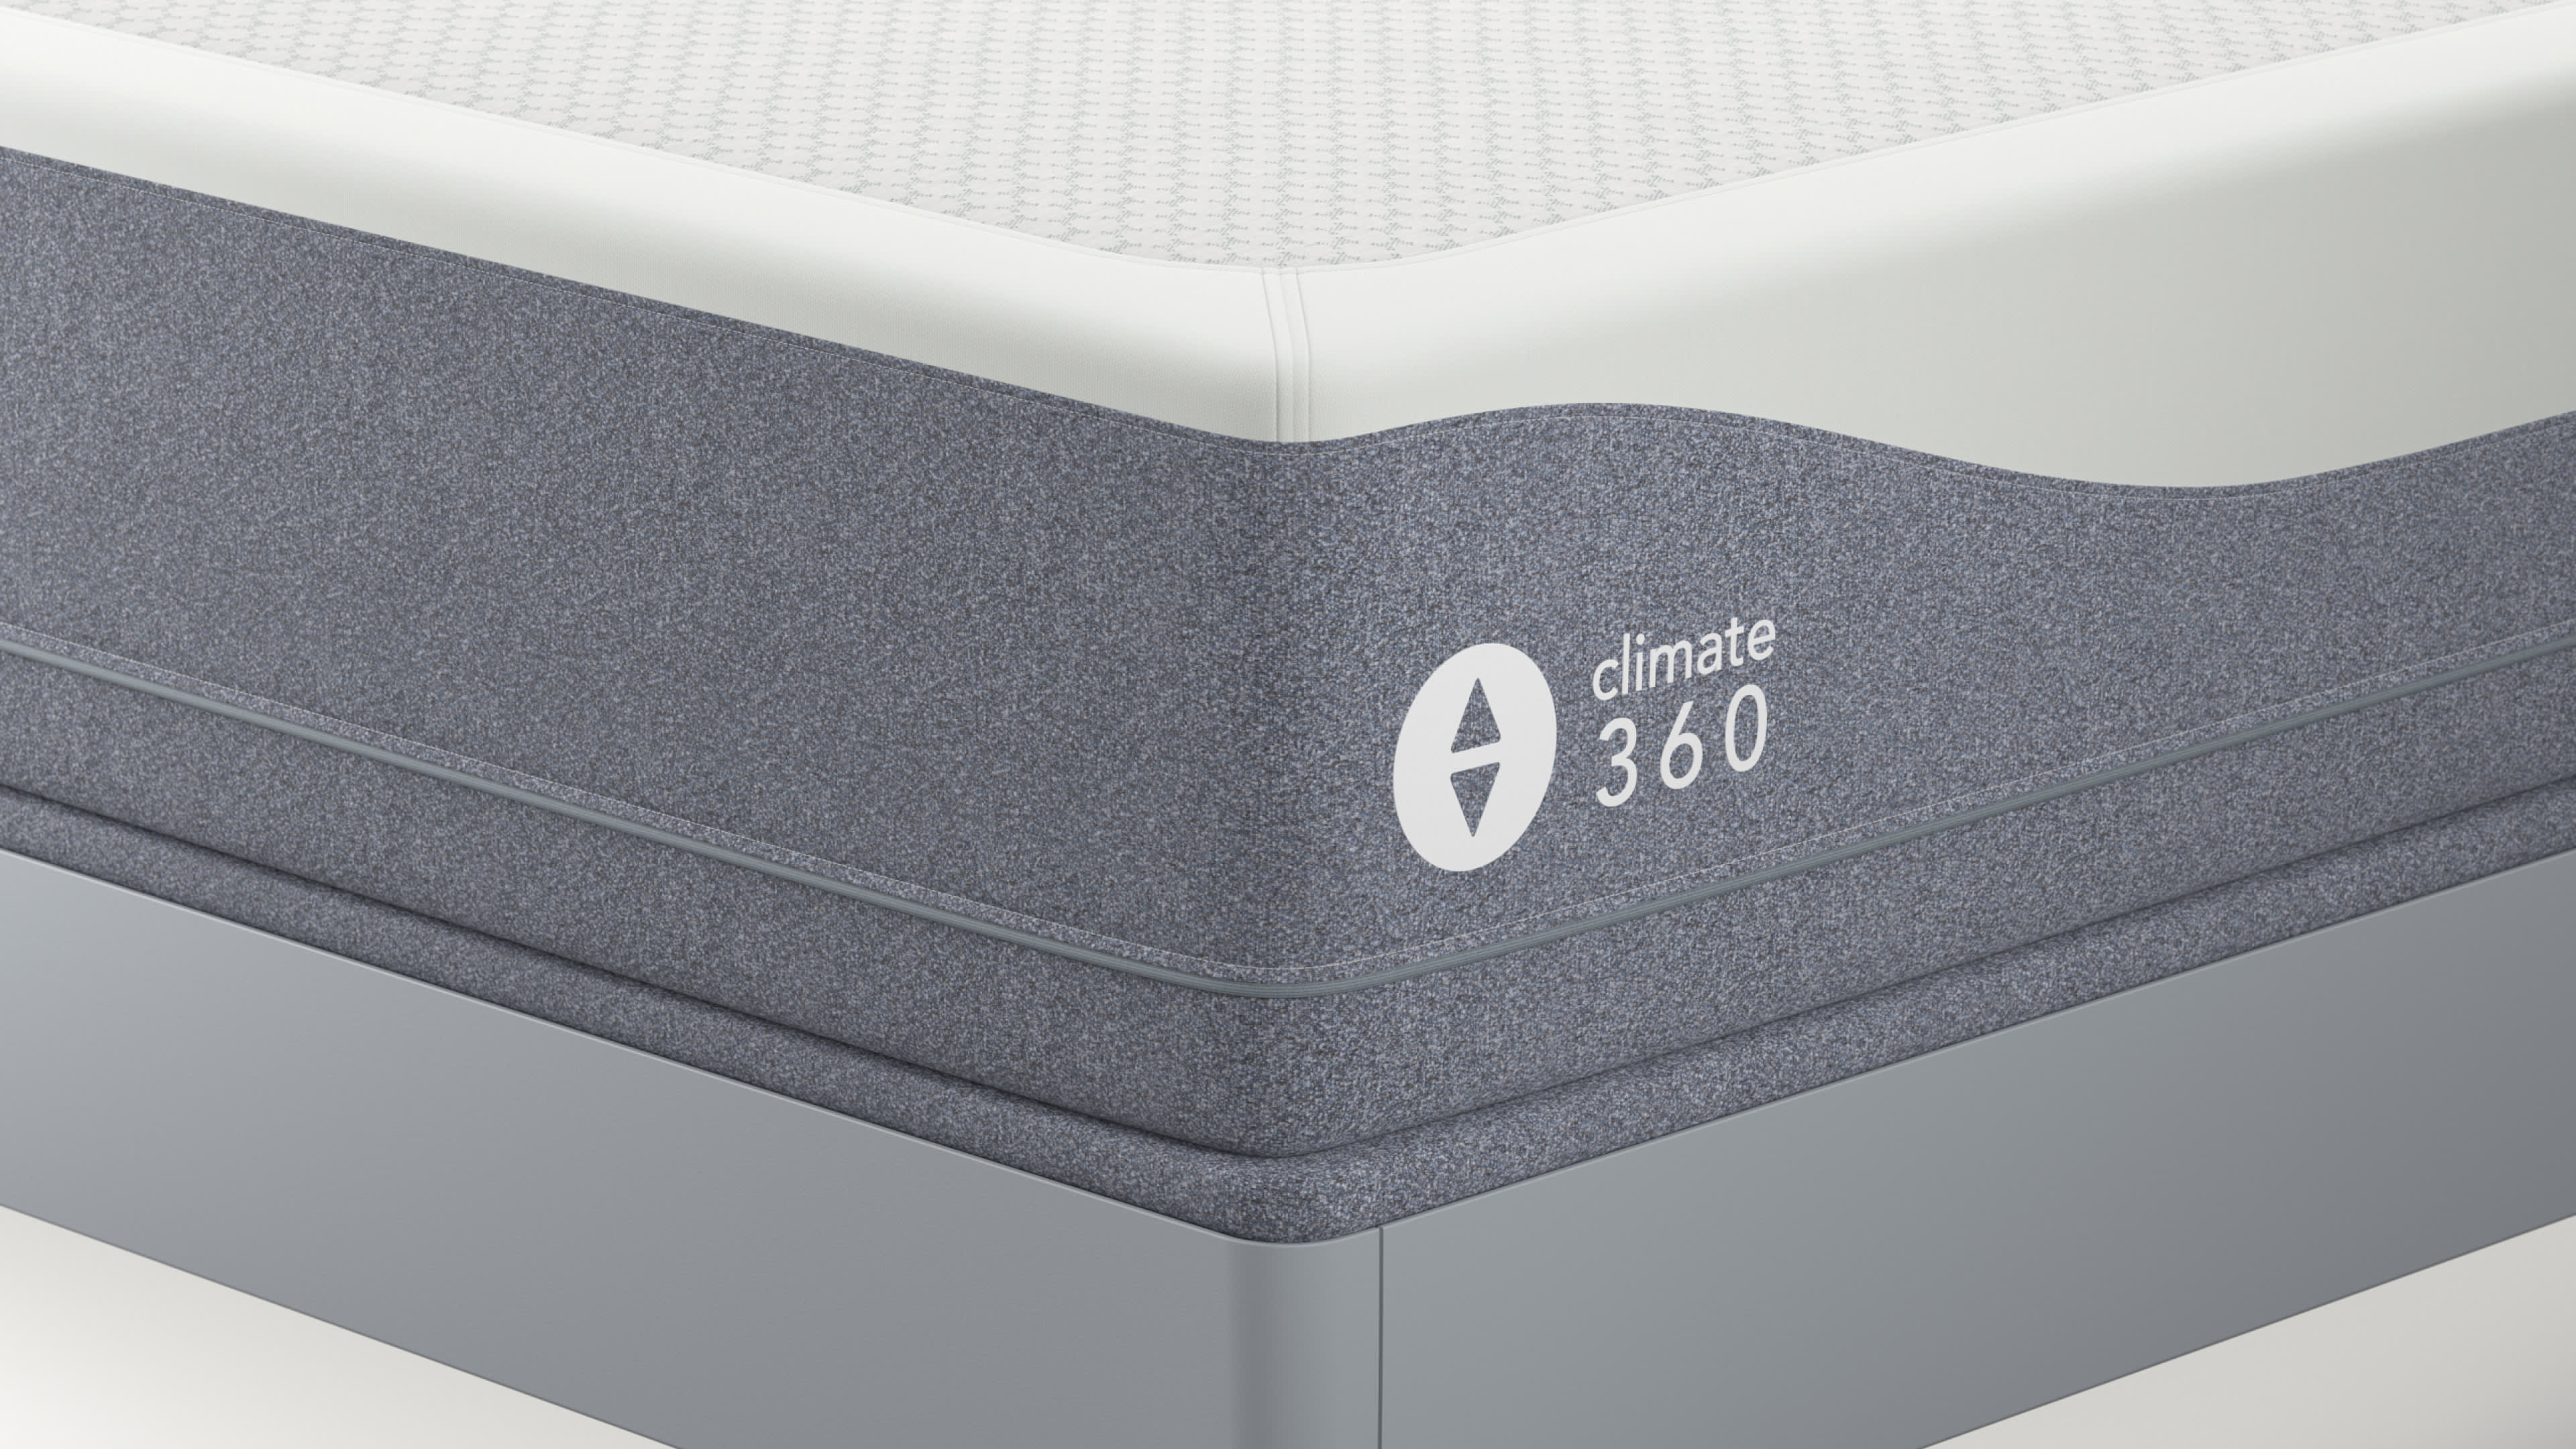 custom logo smart heating pad temperature